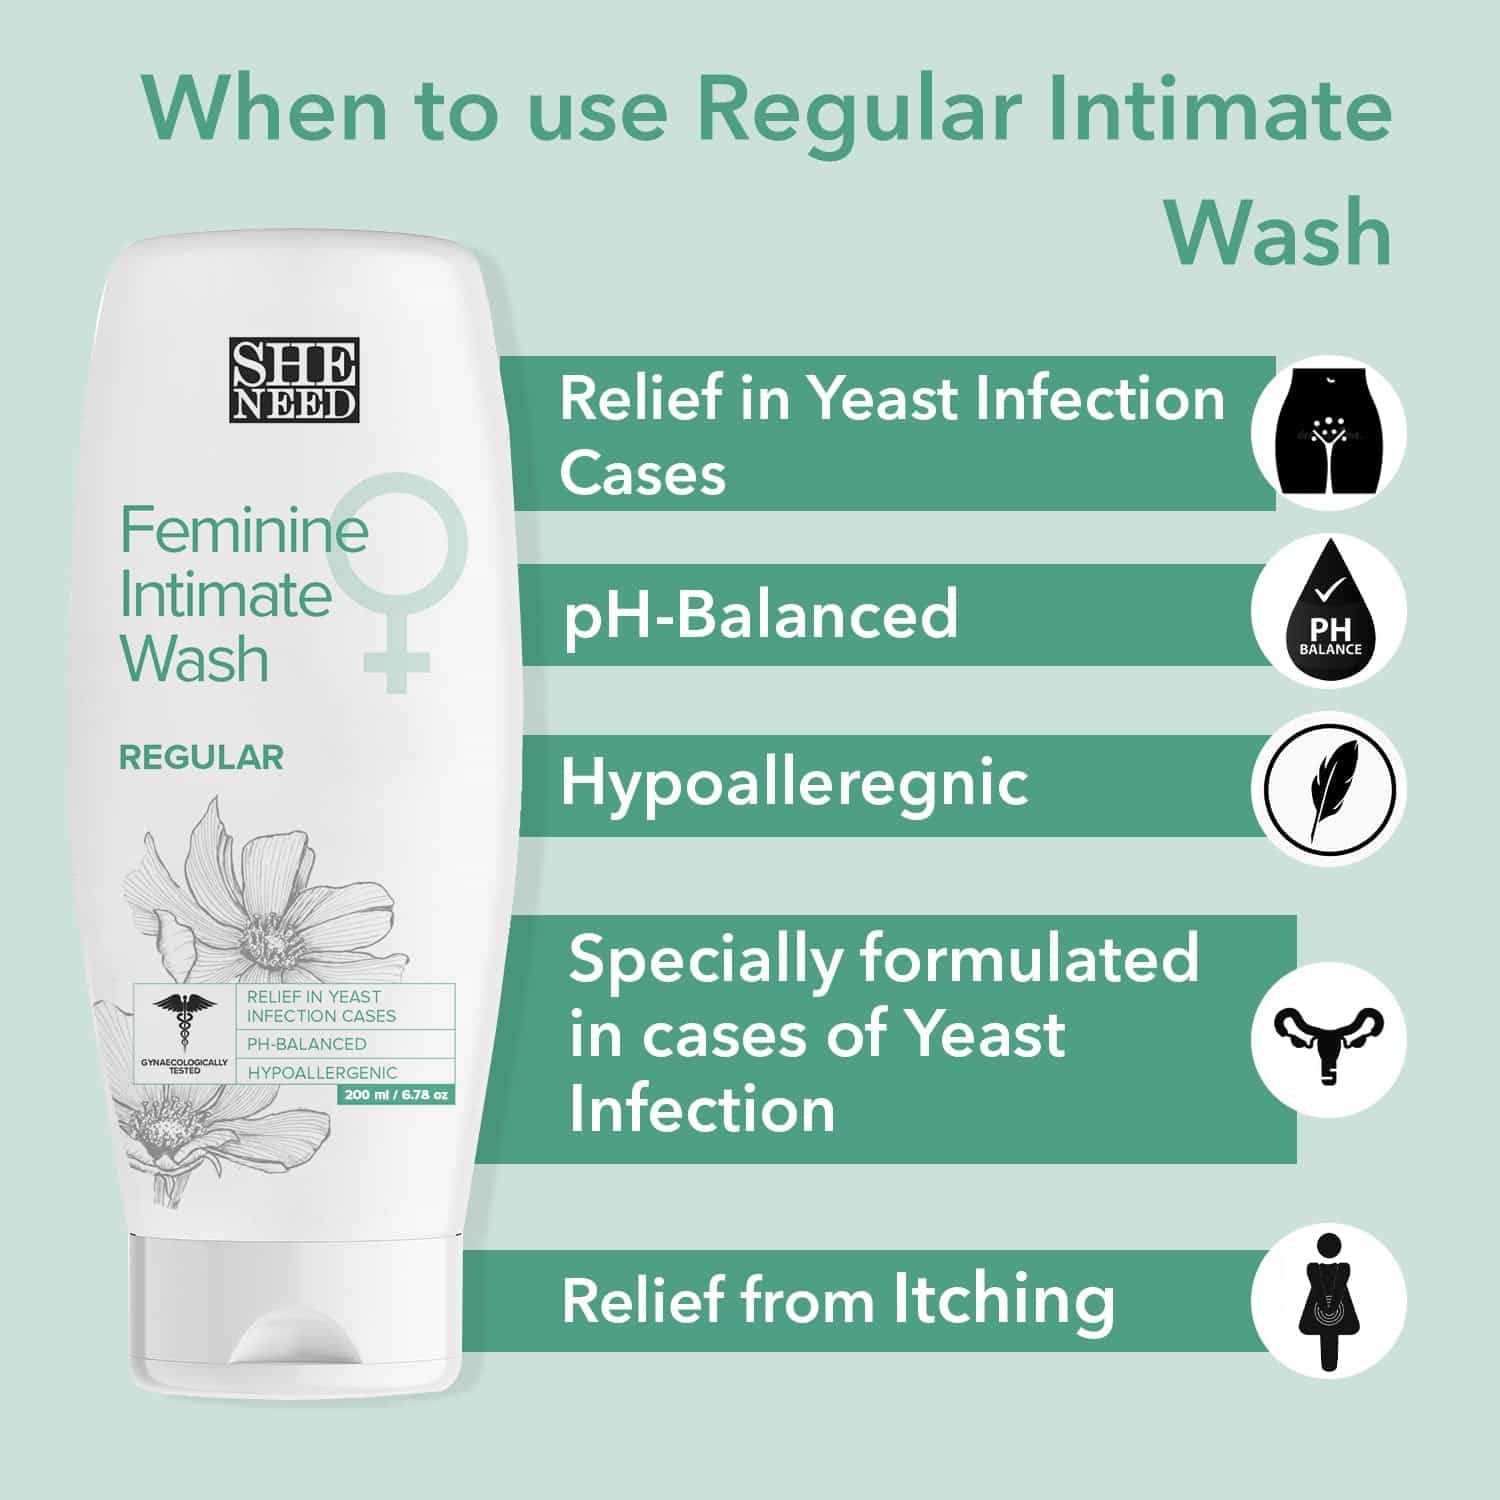 SheNeed Regular Feminine Intimate Wash